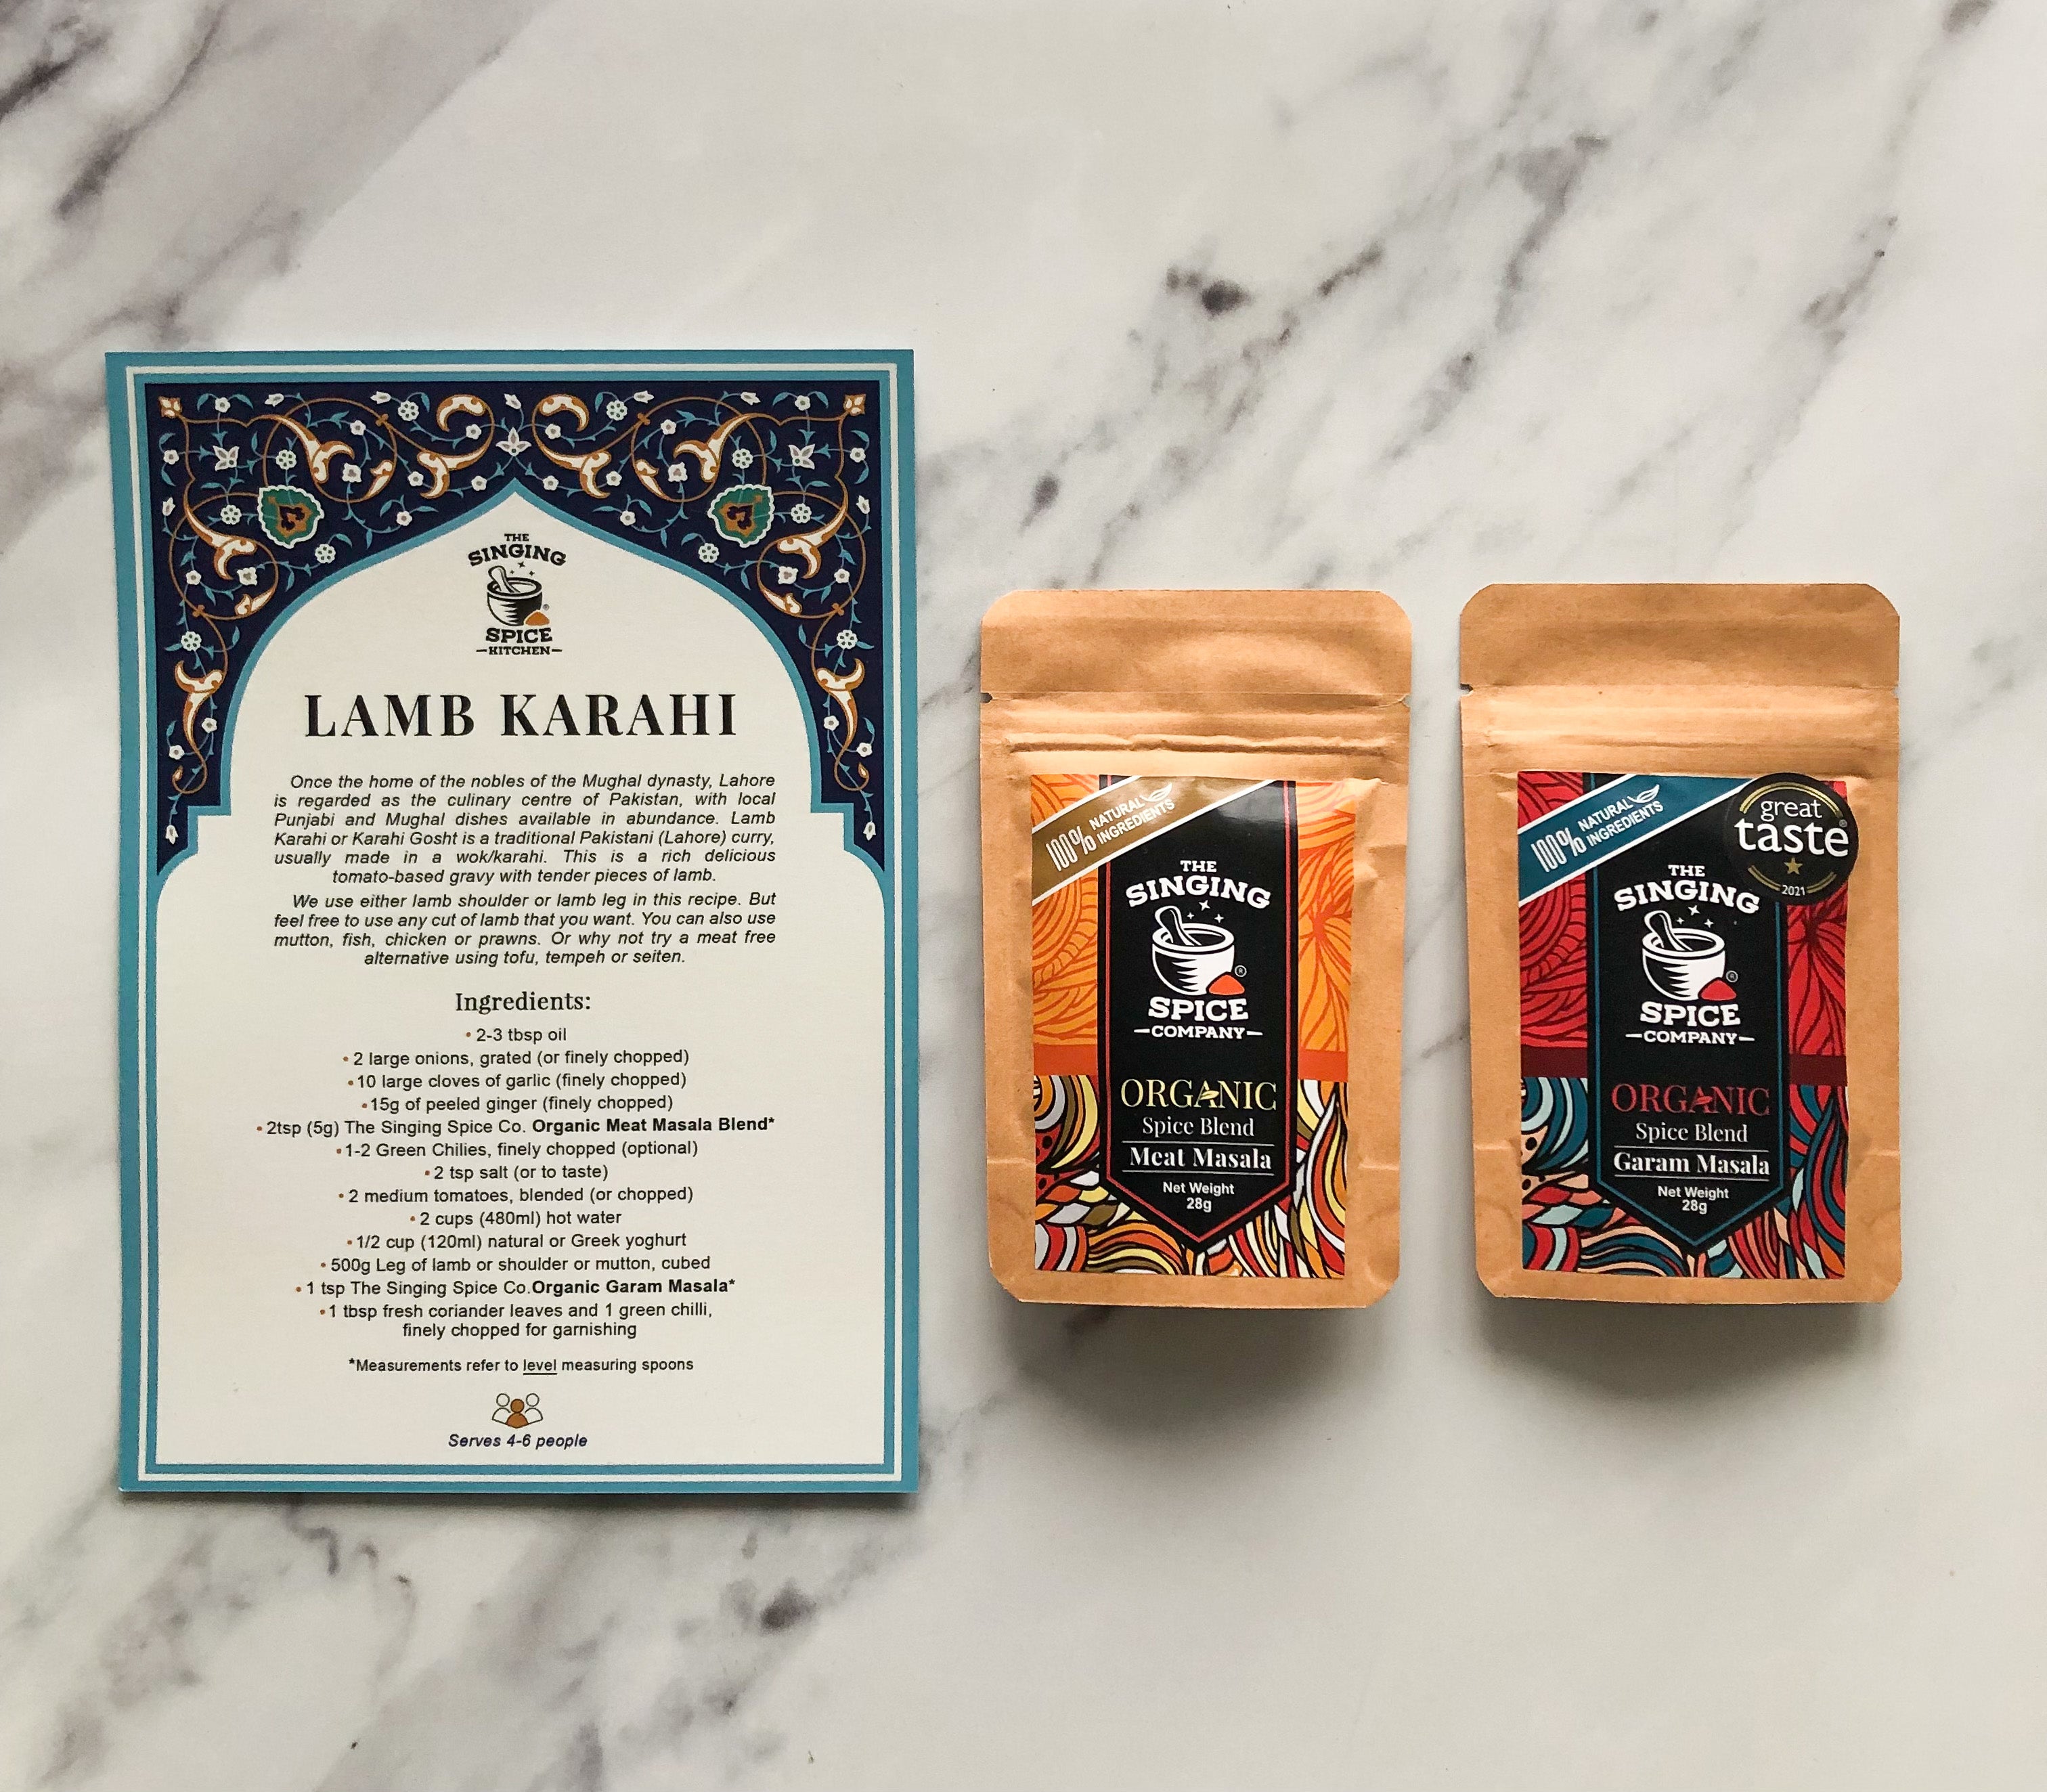 Authentic Meat Masala and Garam Masala Blend With Lamb Karahi Recipe Card